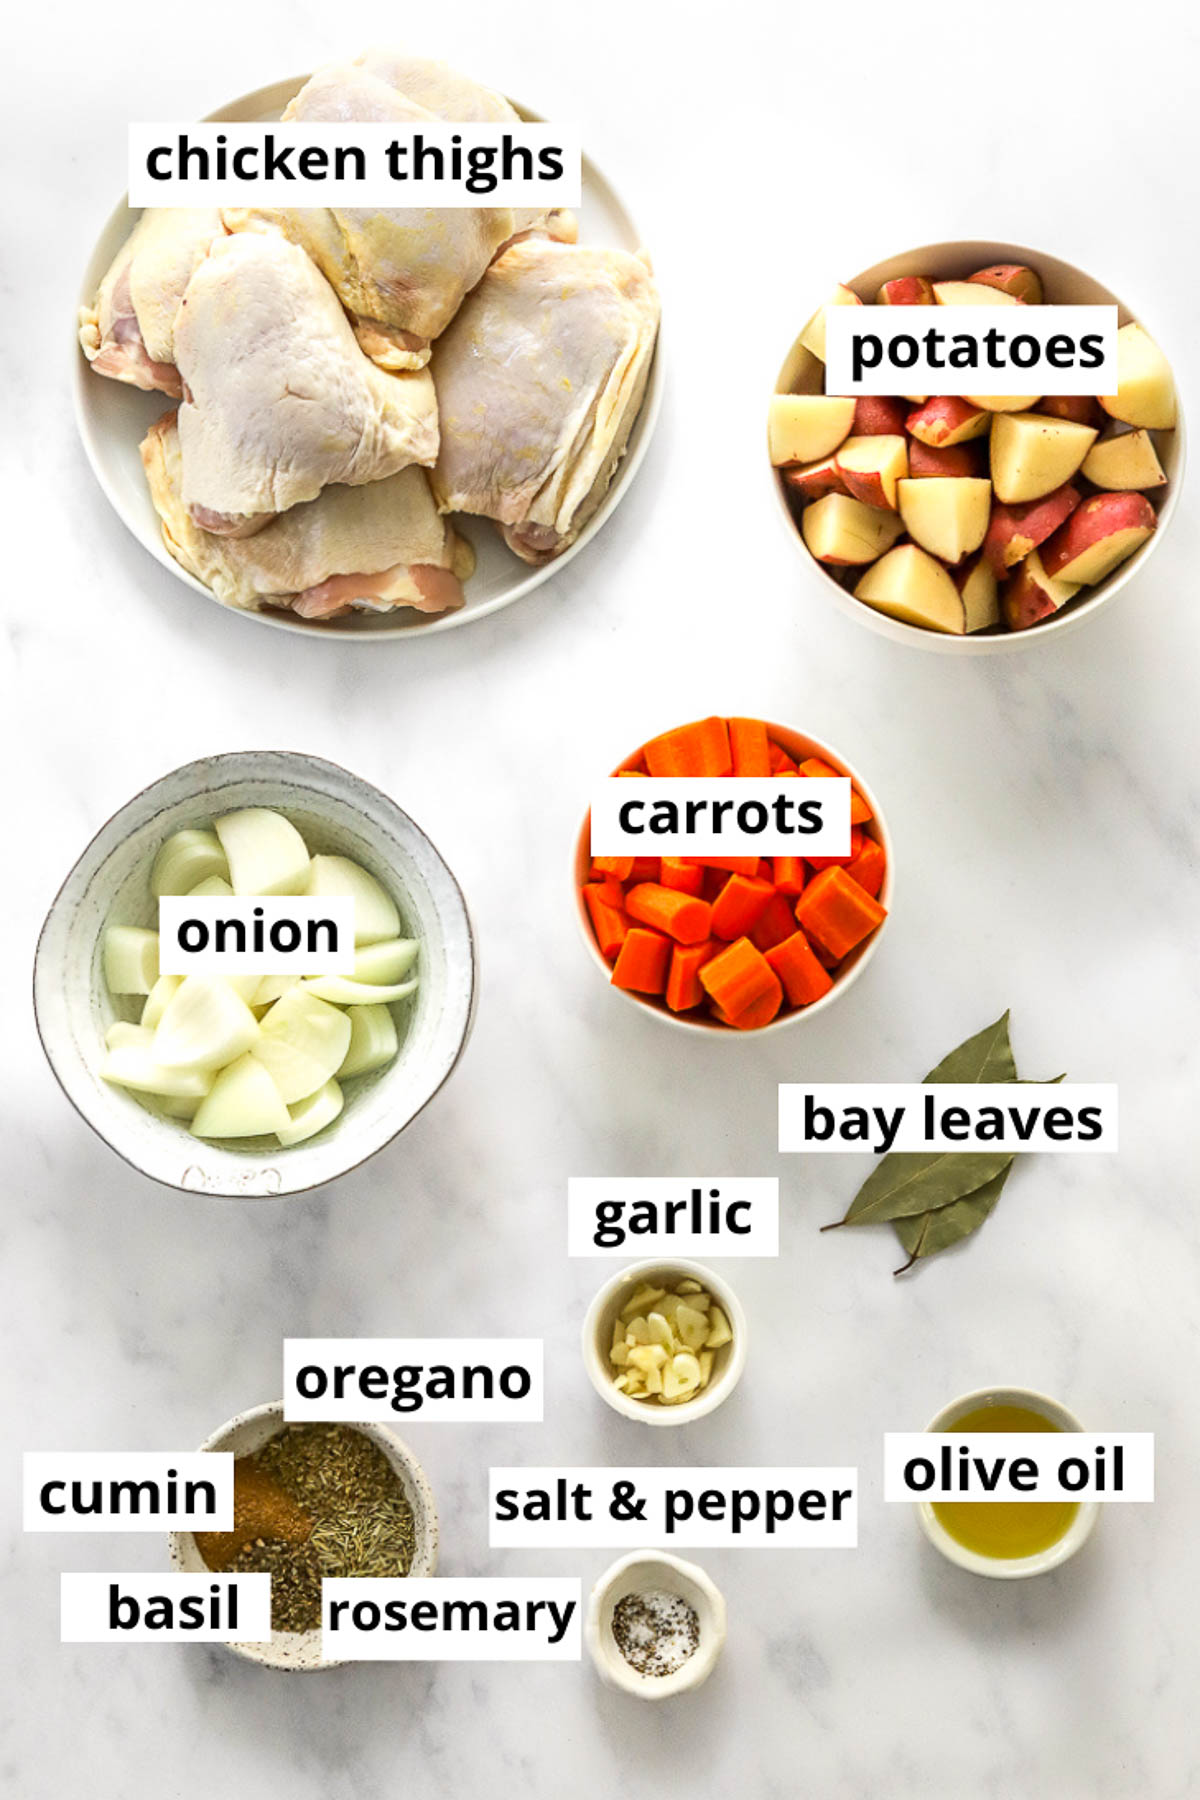 Chicken thighs, potatoes, carrots, onion, bay leaves, garlic, oregano, basil, cumin, rosemary, oil, salt and pepper.